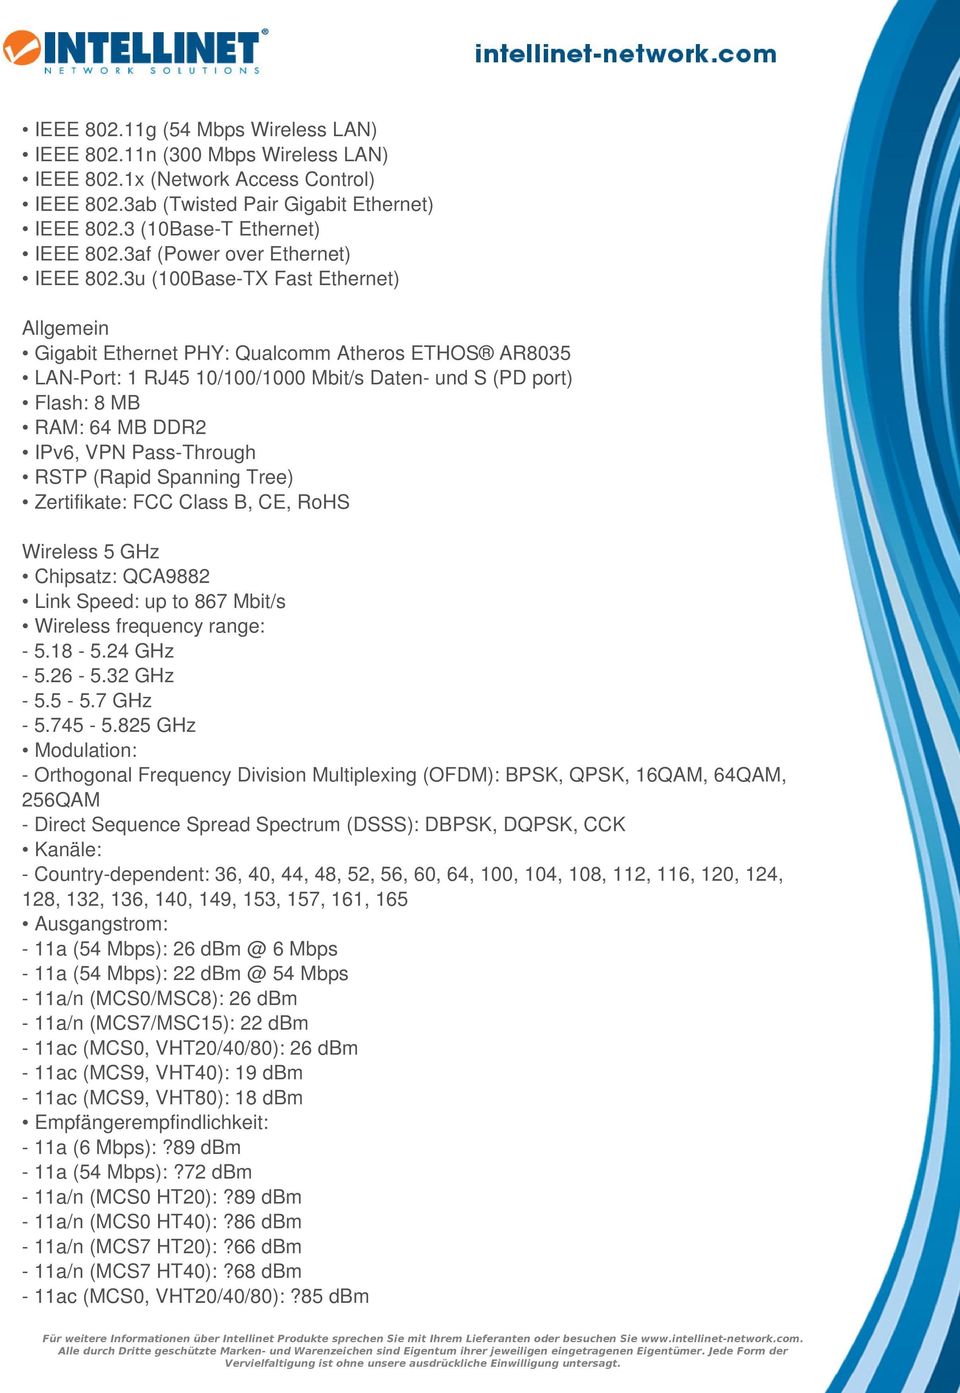 3u (100Base-TX Fast Ethernet) Allgemein Gigabit Ethernet PHY: Qualcomm Atheros ETHOS AR8035 LAN-Port: 1 RJ45 10/100/1000 Mbit/s Daten- und S (PD port) Flash: 8 MB RAM: 64 MB DDR2 IPv6, VPN